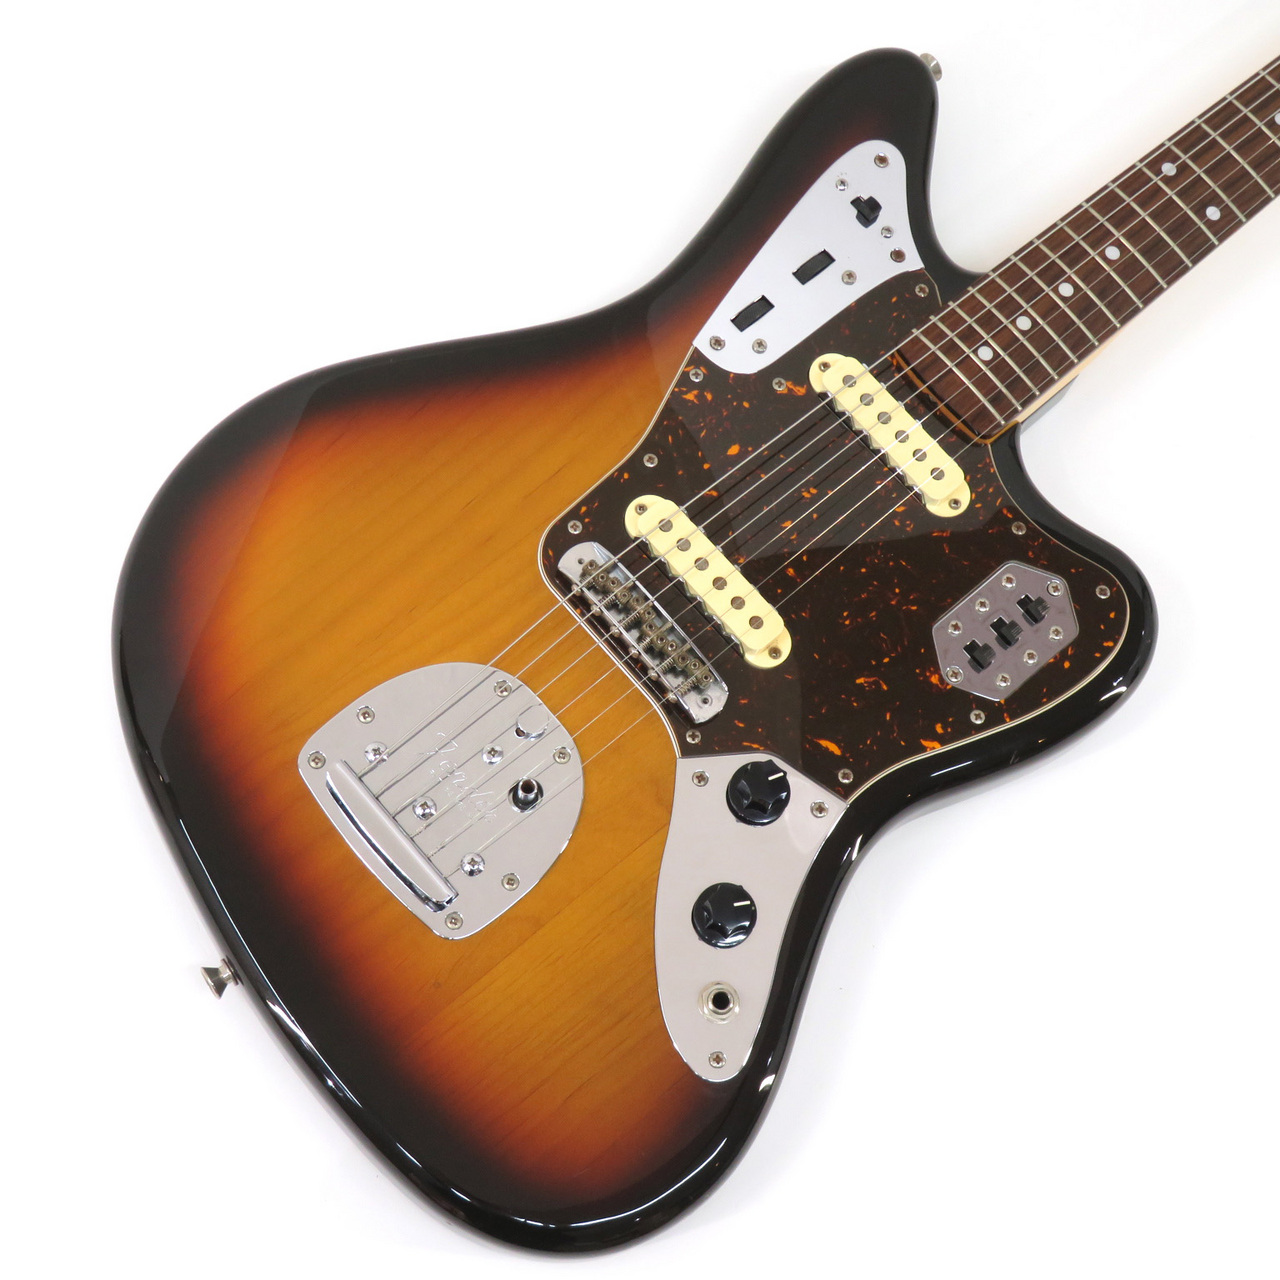 Fender JAPAN エレキギター ジャガー jaguar 赤 レッド 純正ソフト 